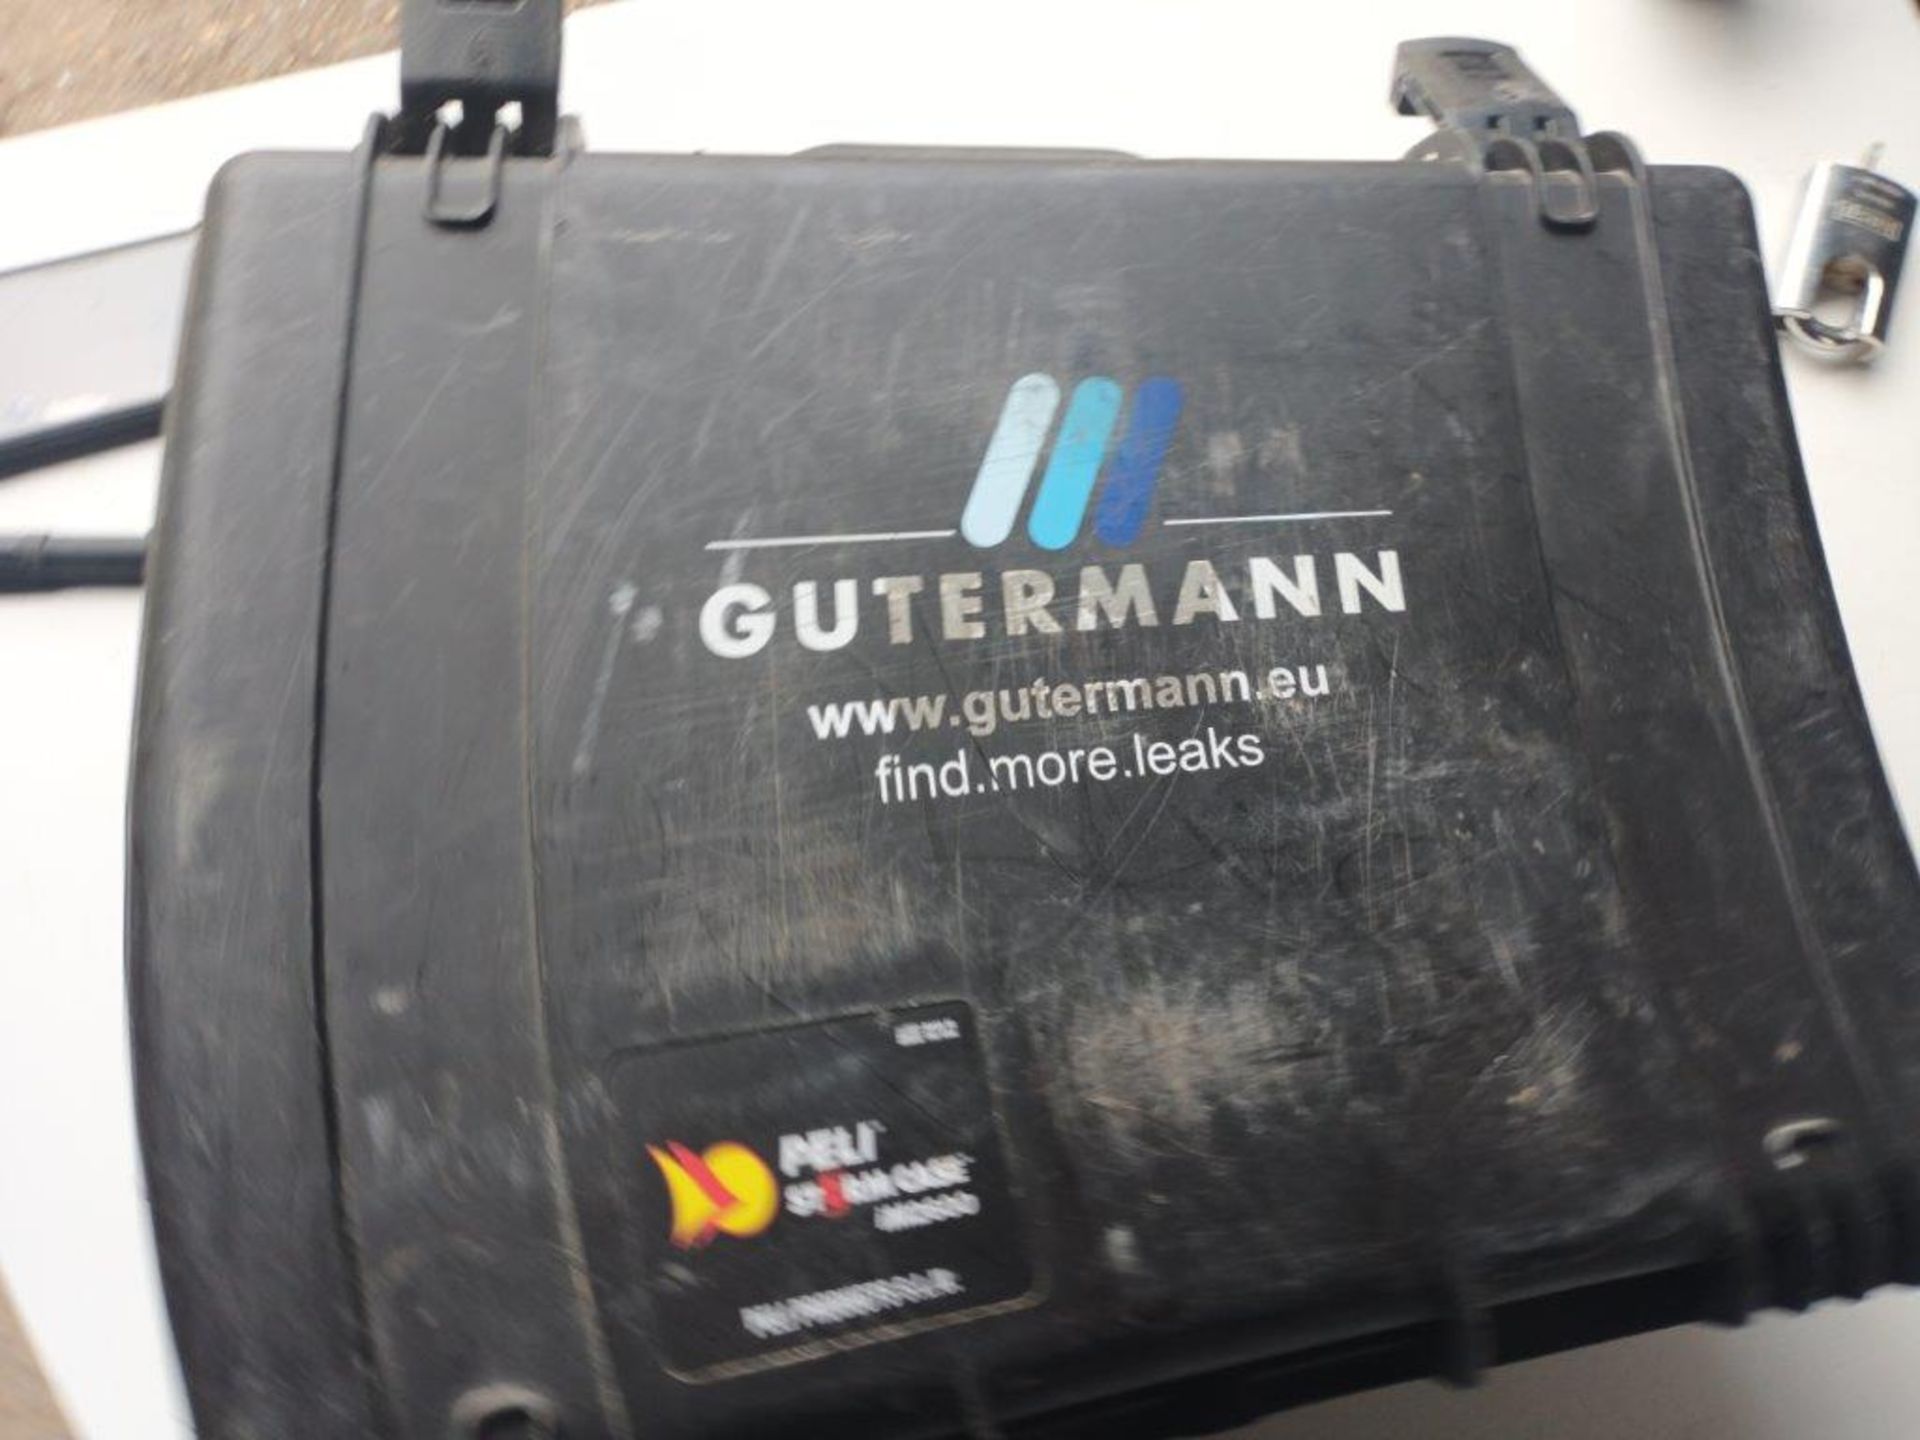 Gutermann Aquascope 3 leak kit - Image 2 of 4